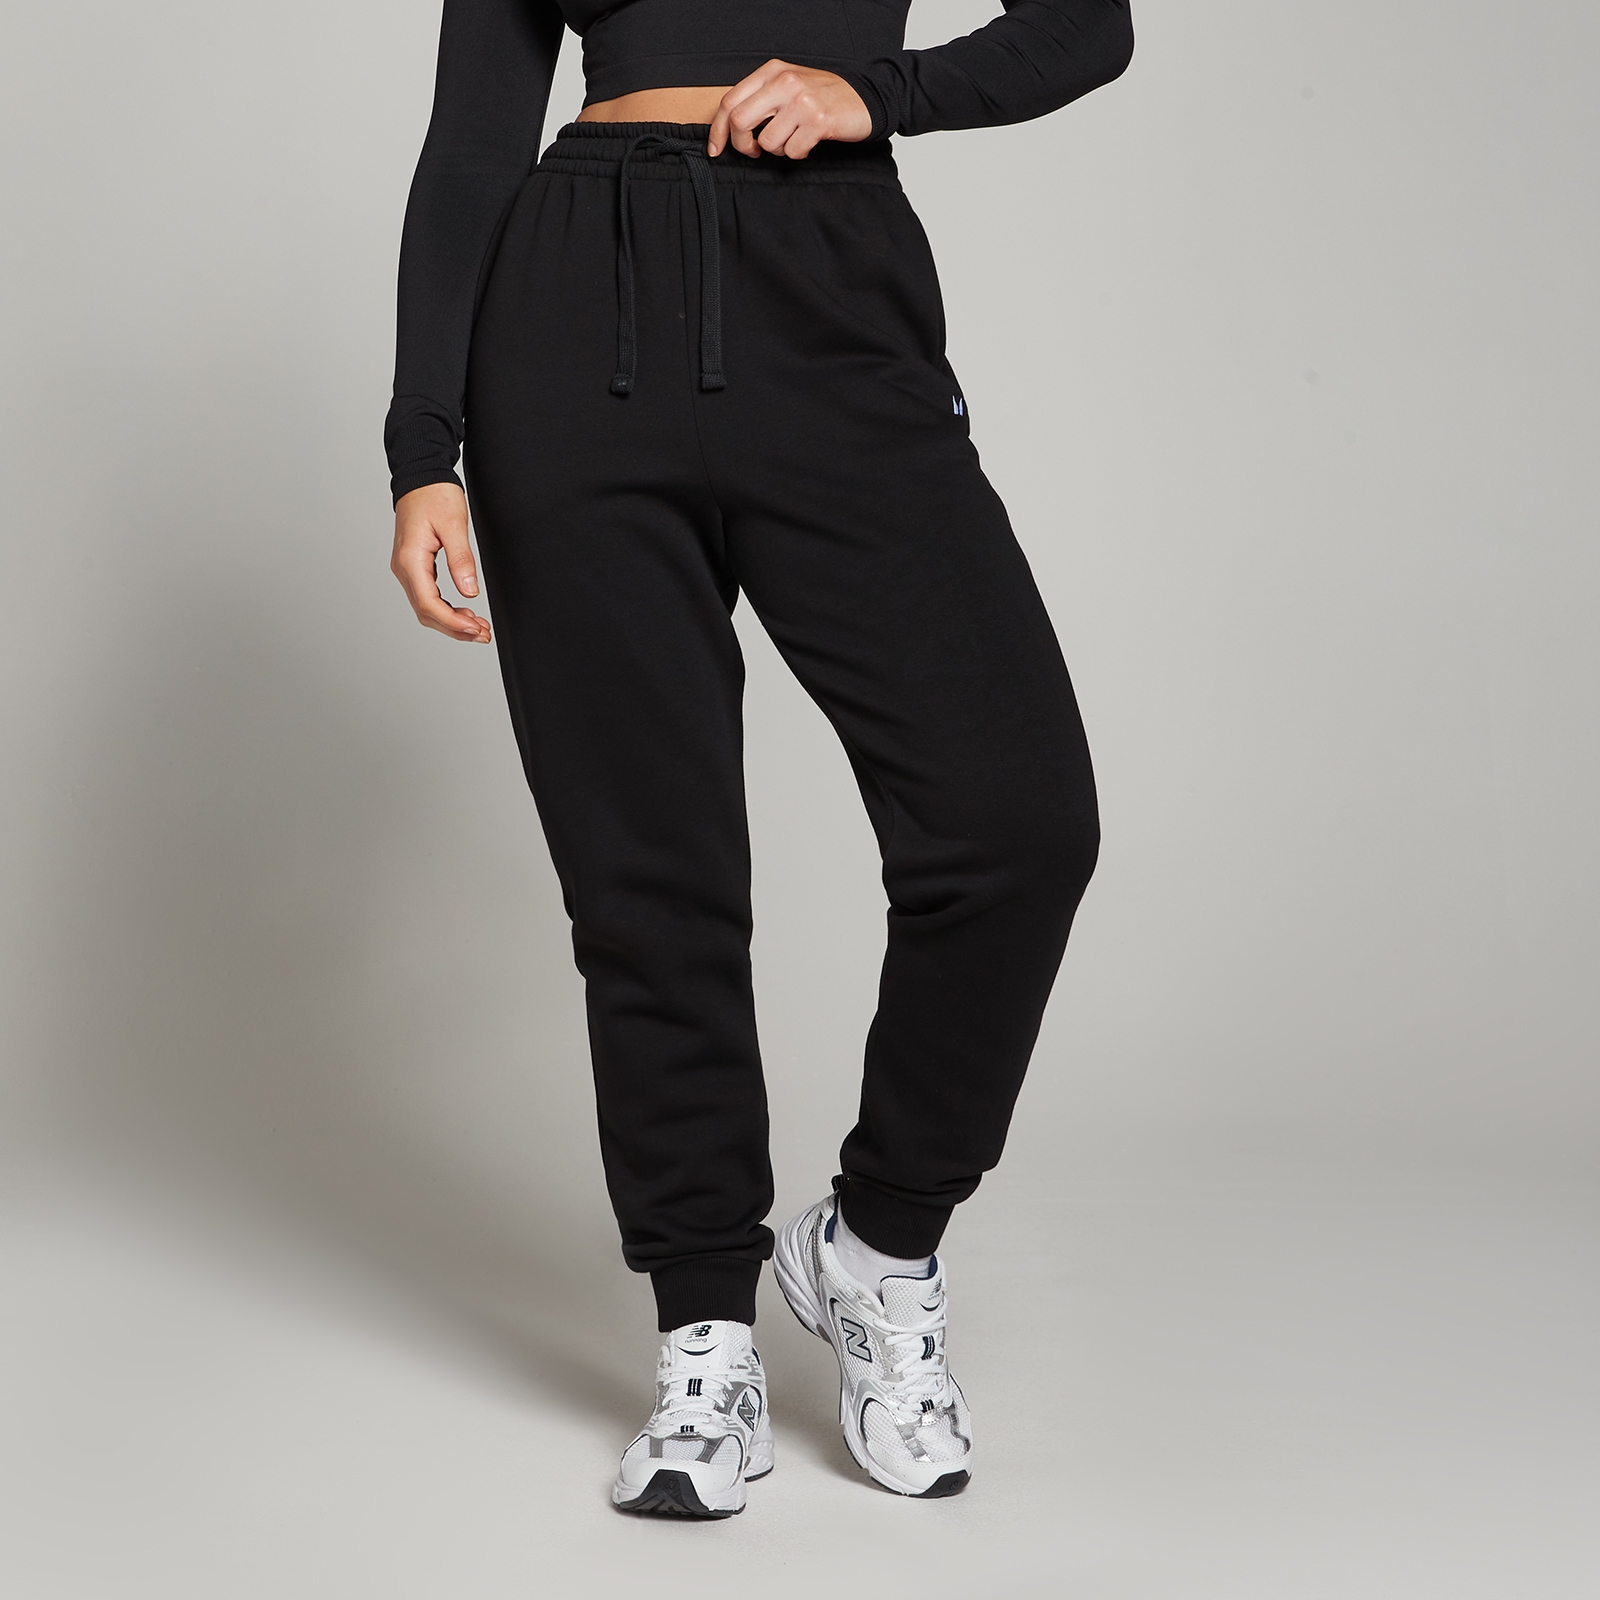 Image of Pantaloni da jogging vestibilità regolare MP Basics da donna - Neri - XXS